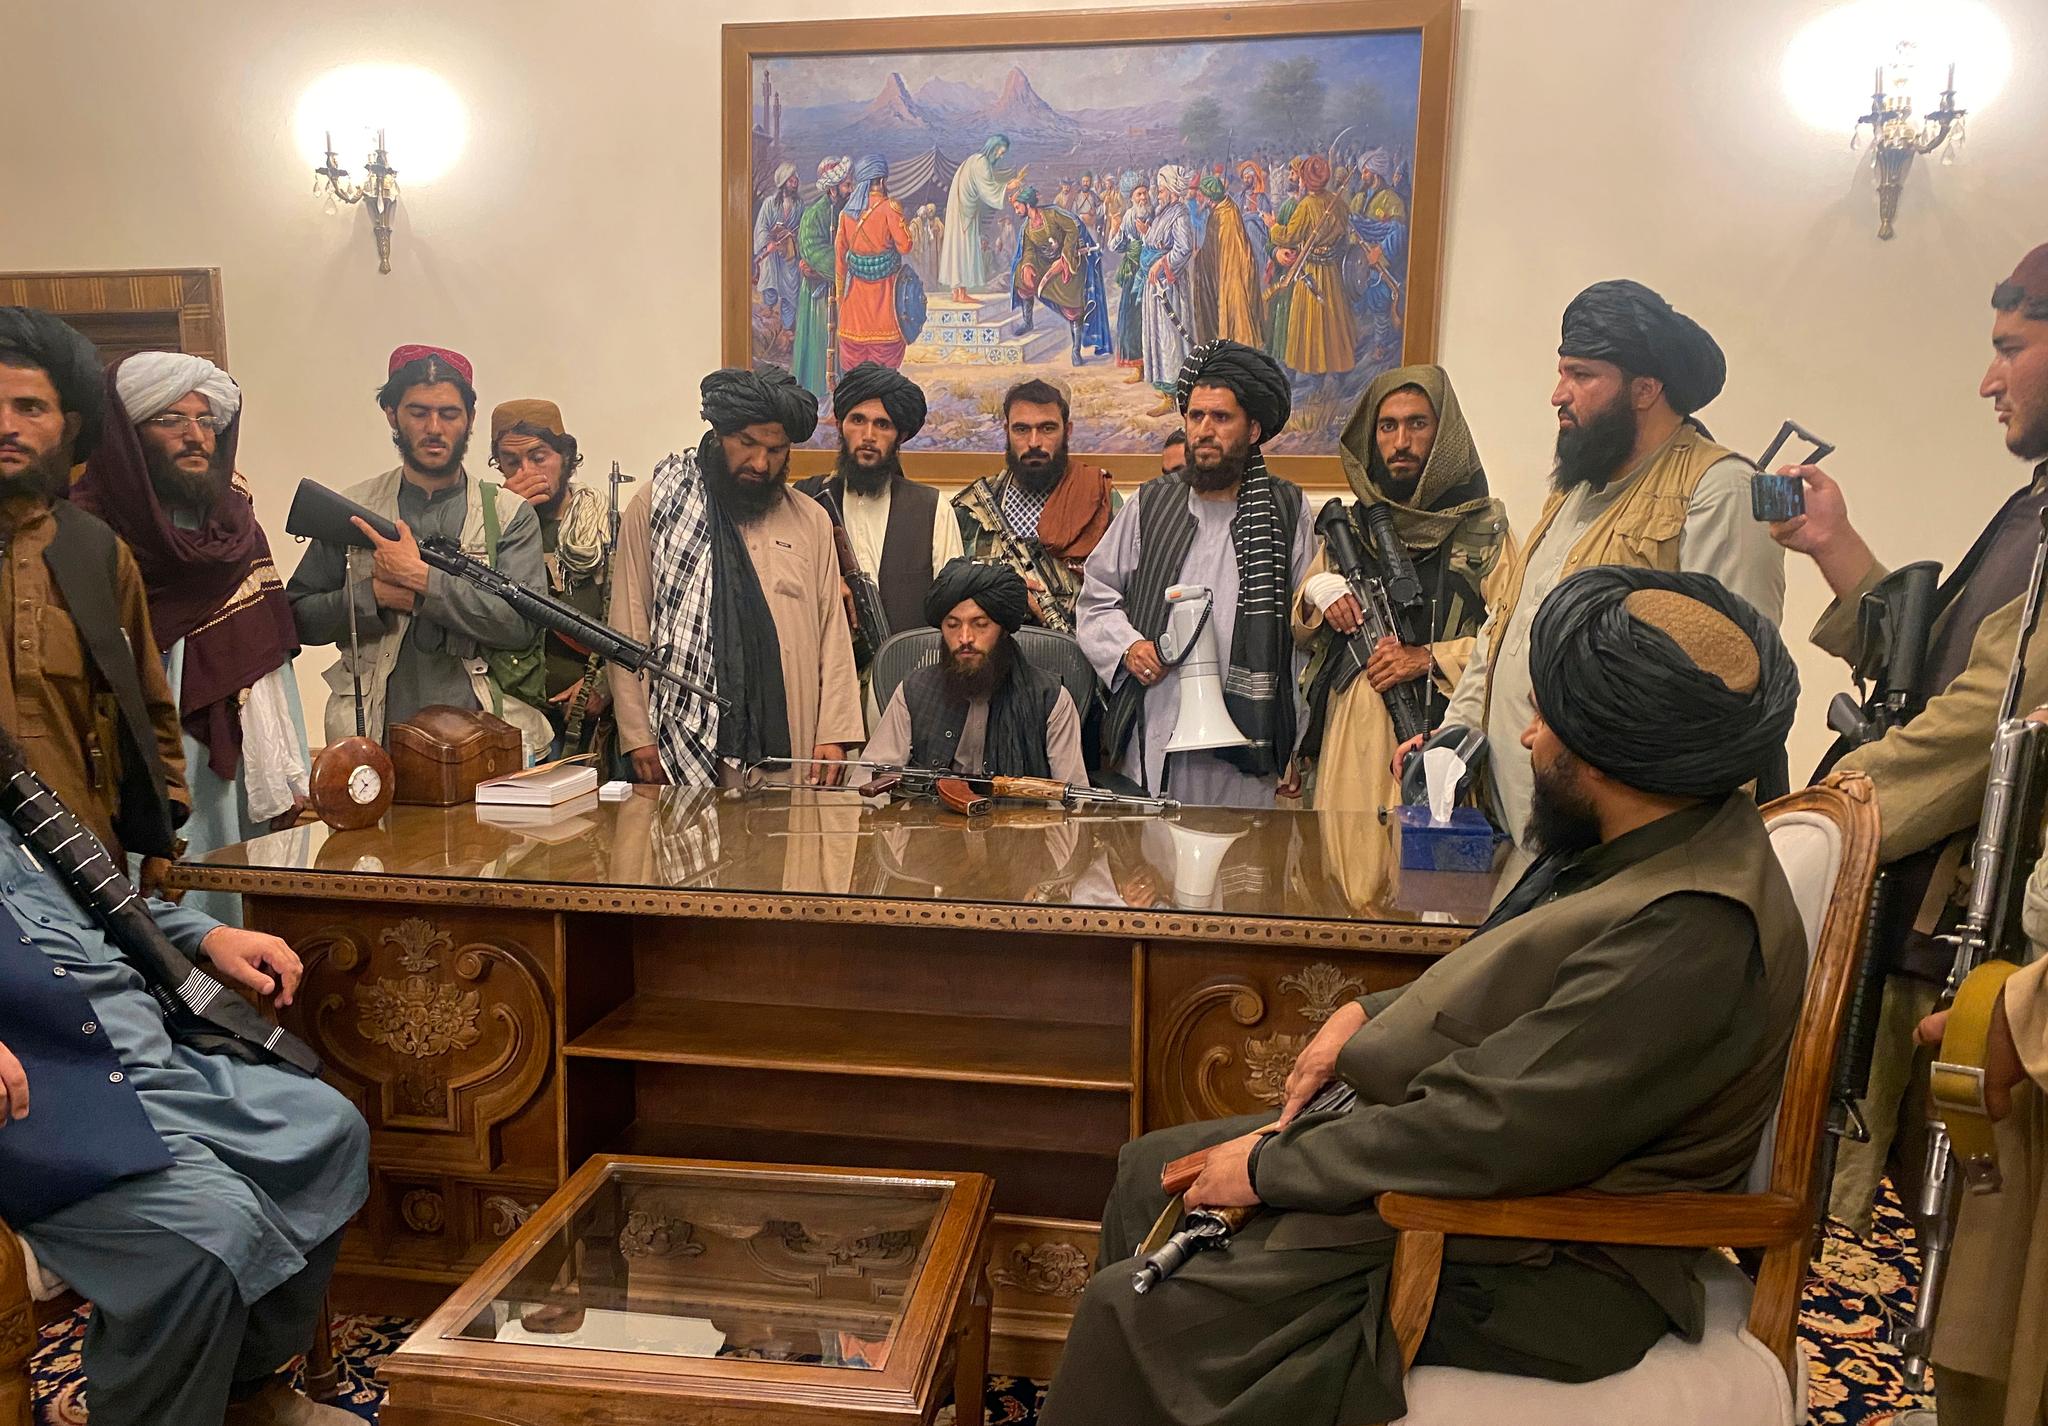 Norway lauds the Taliban, say Afghans in Norway